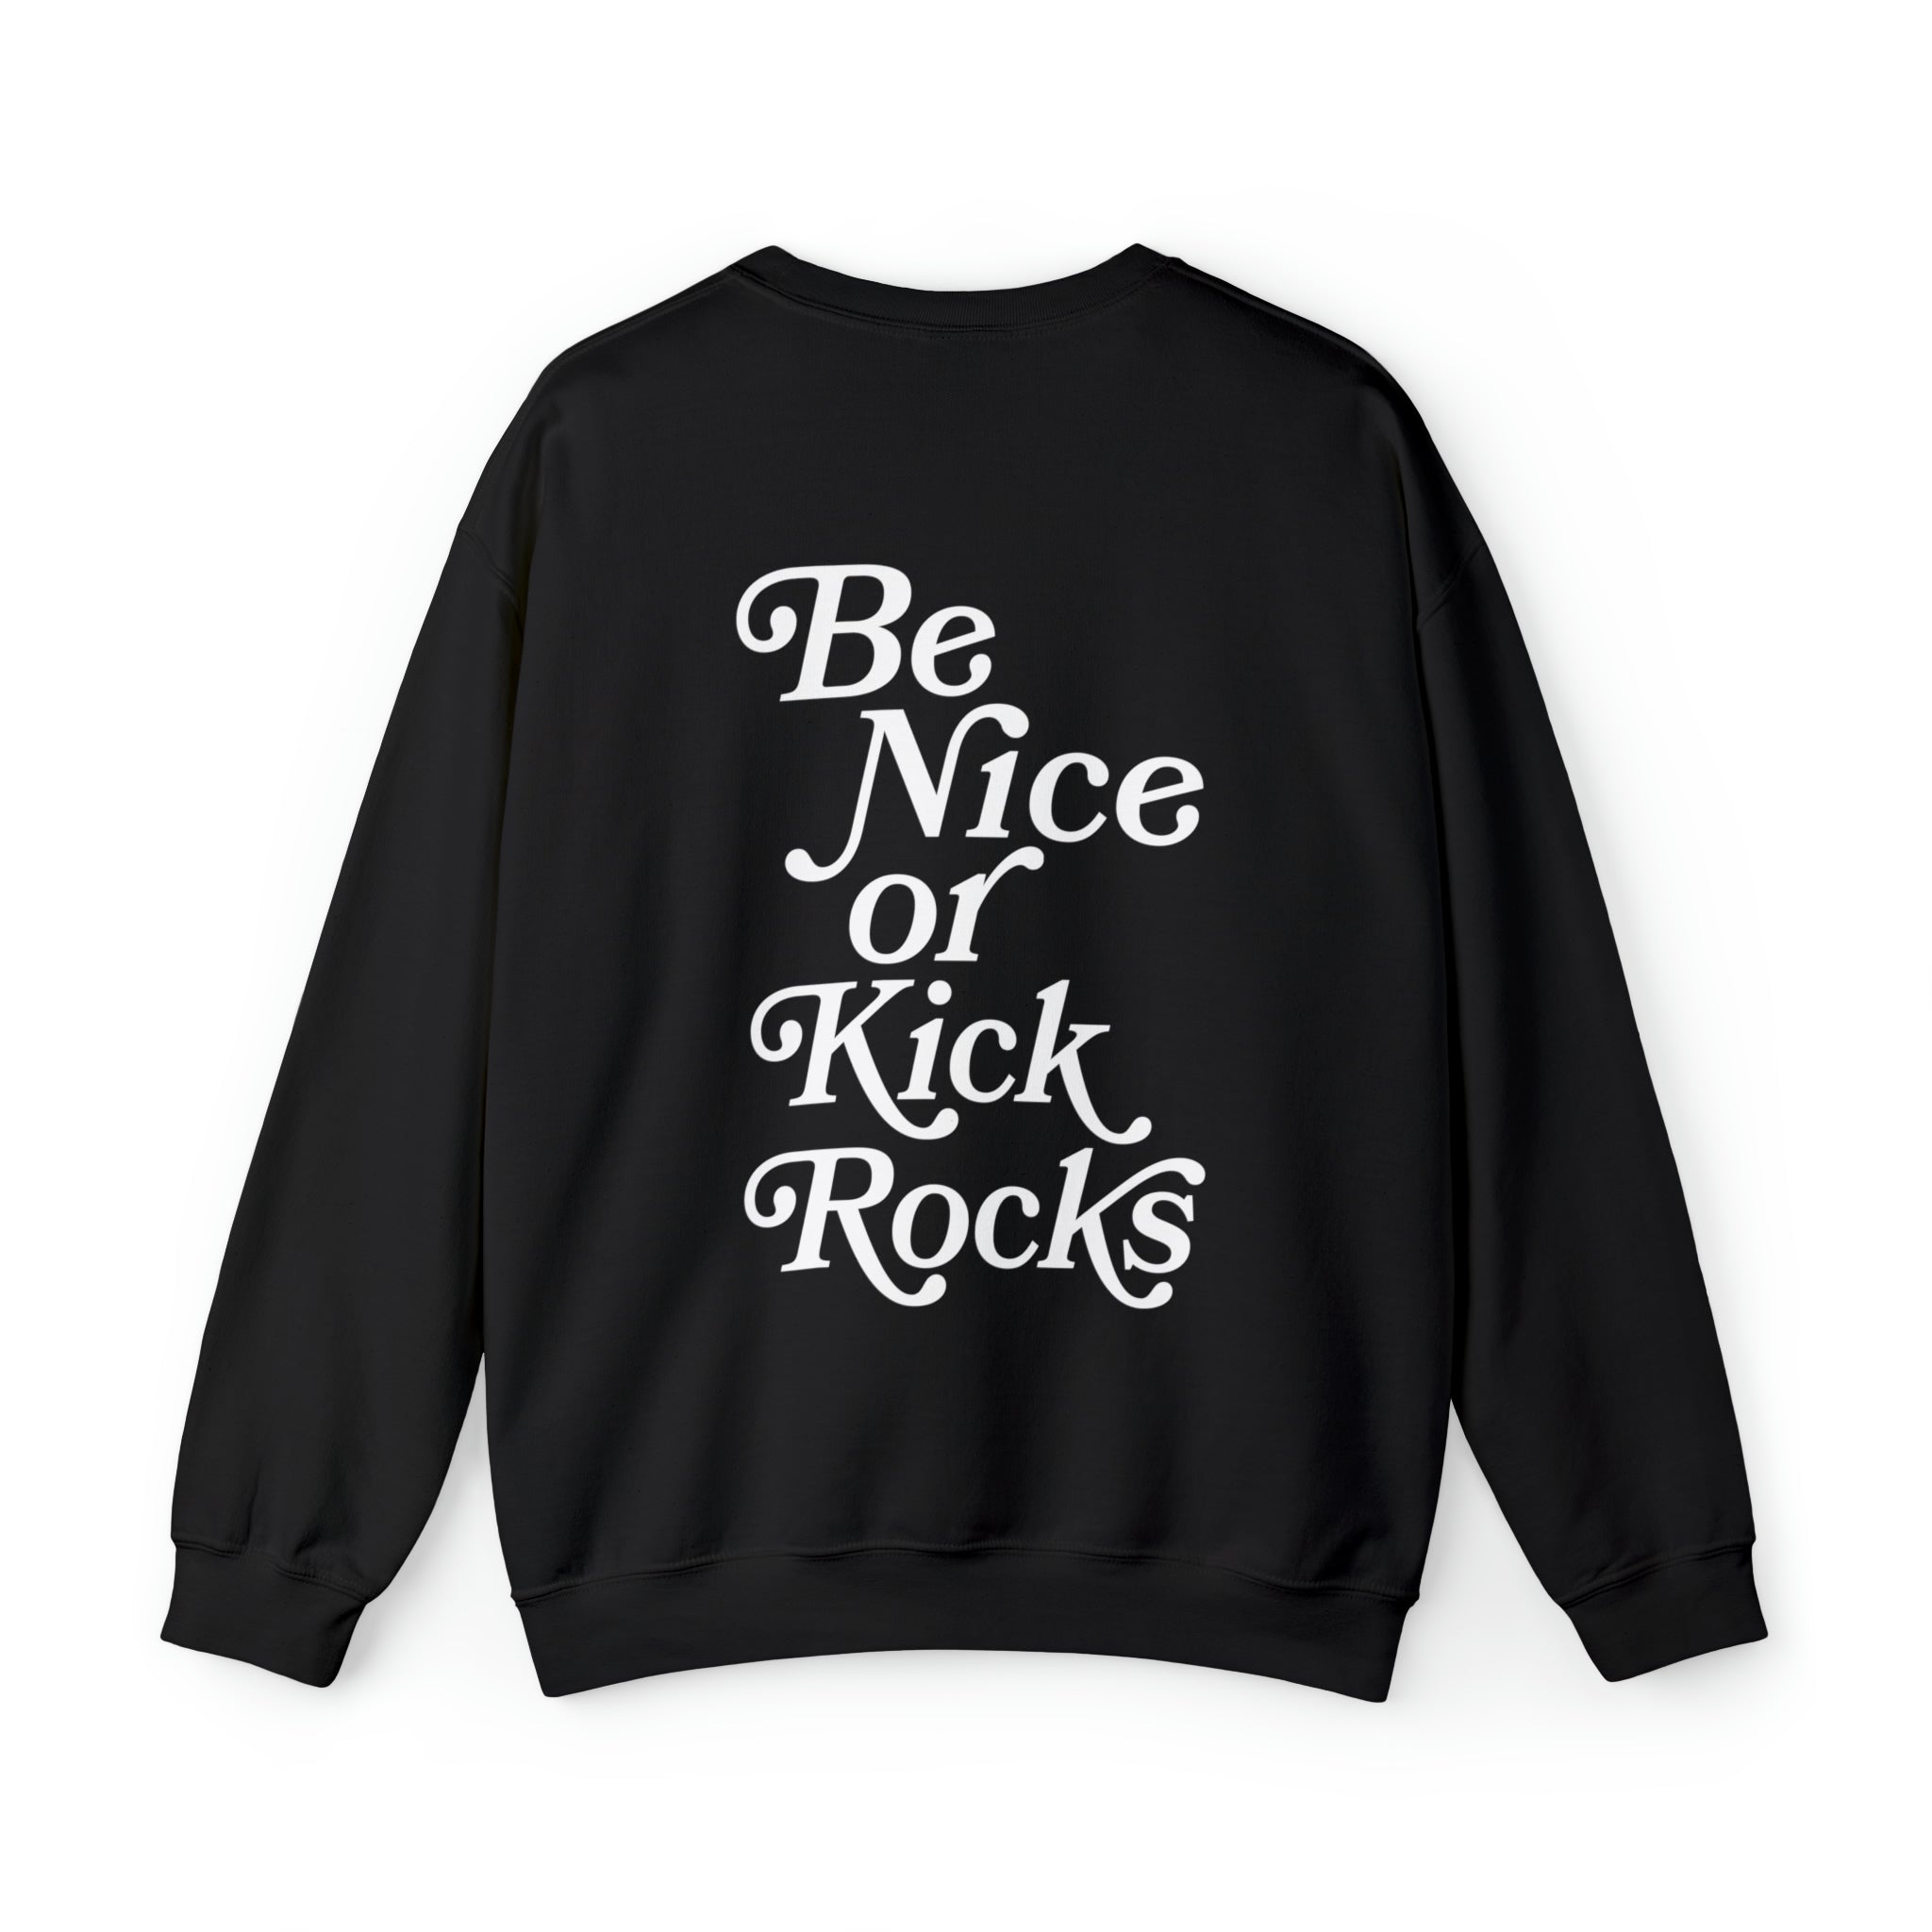 Dark crewneck sweatshirt with Be Nice or Kick Rocks text